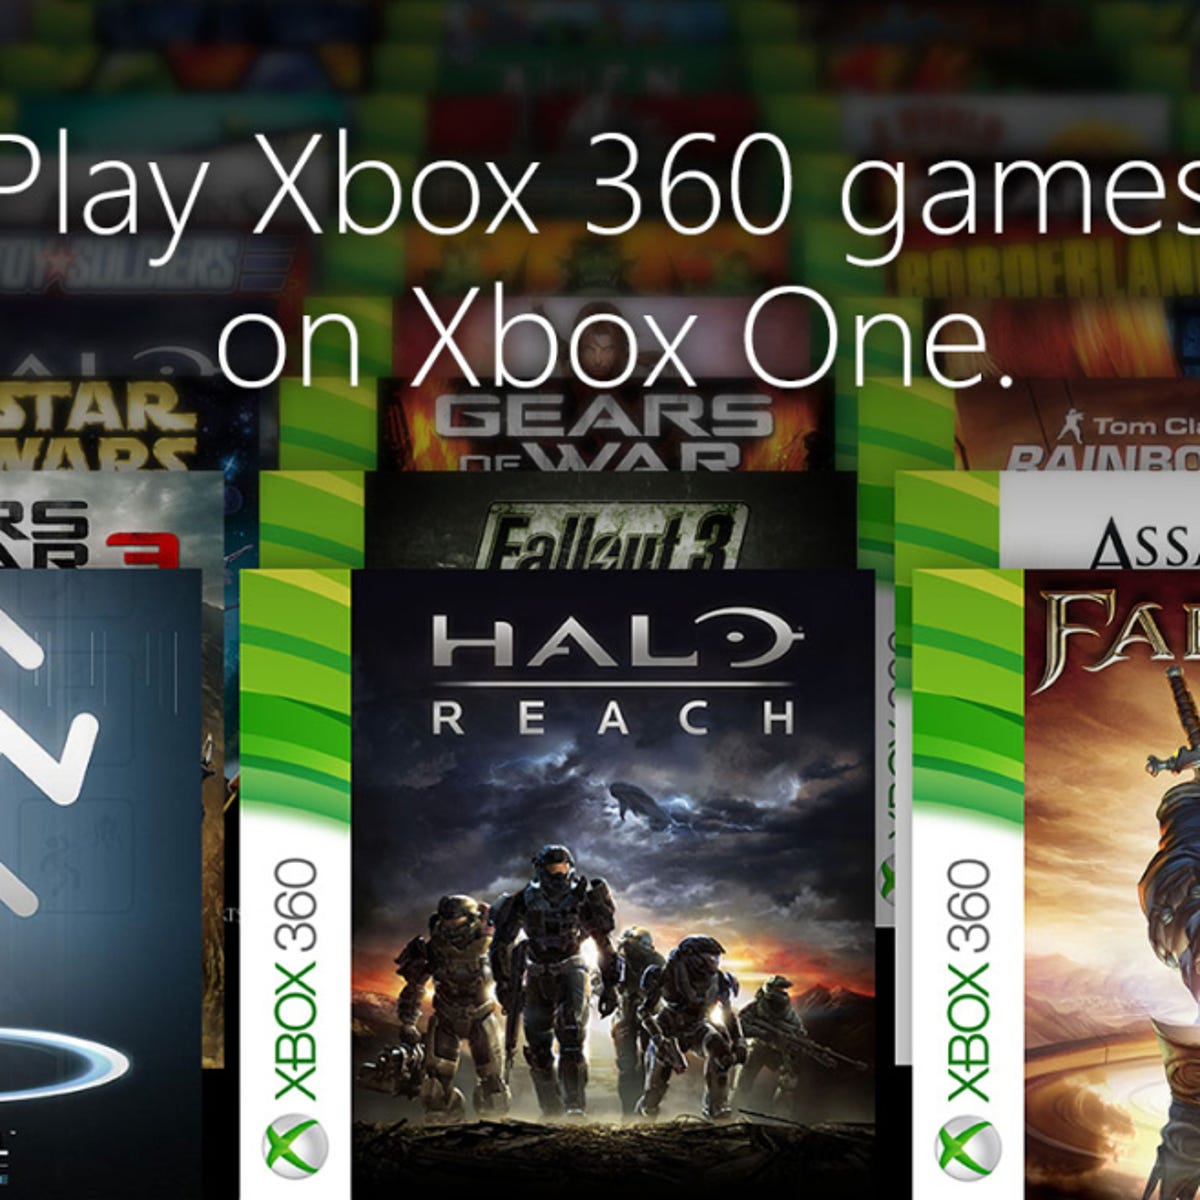 Xbox 360 games download. Xbox игры. Игры на Xbox 360. Игры на Xbox one. Игры на иксбокс 360.